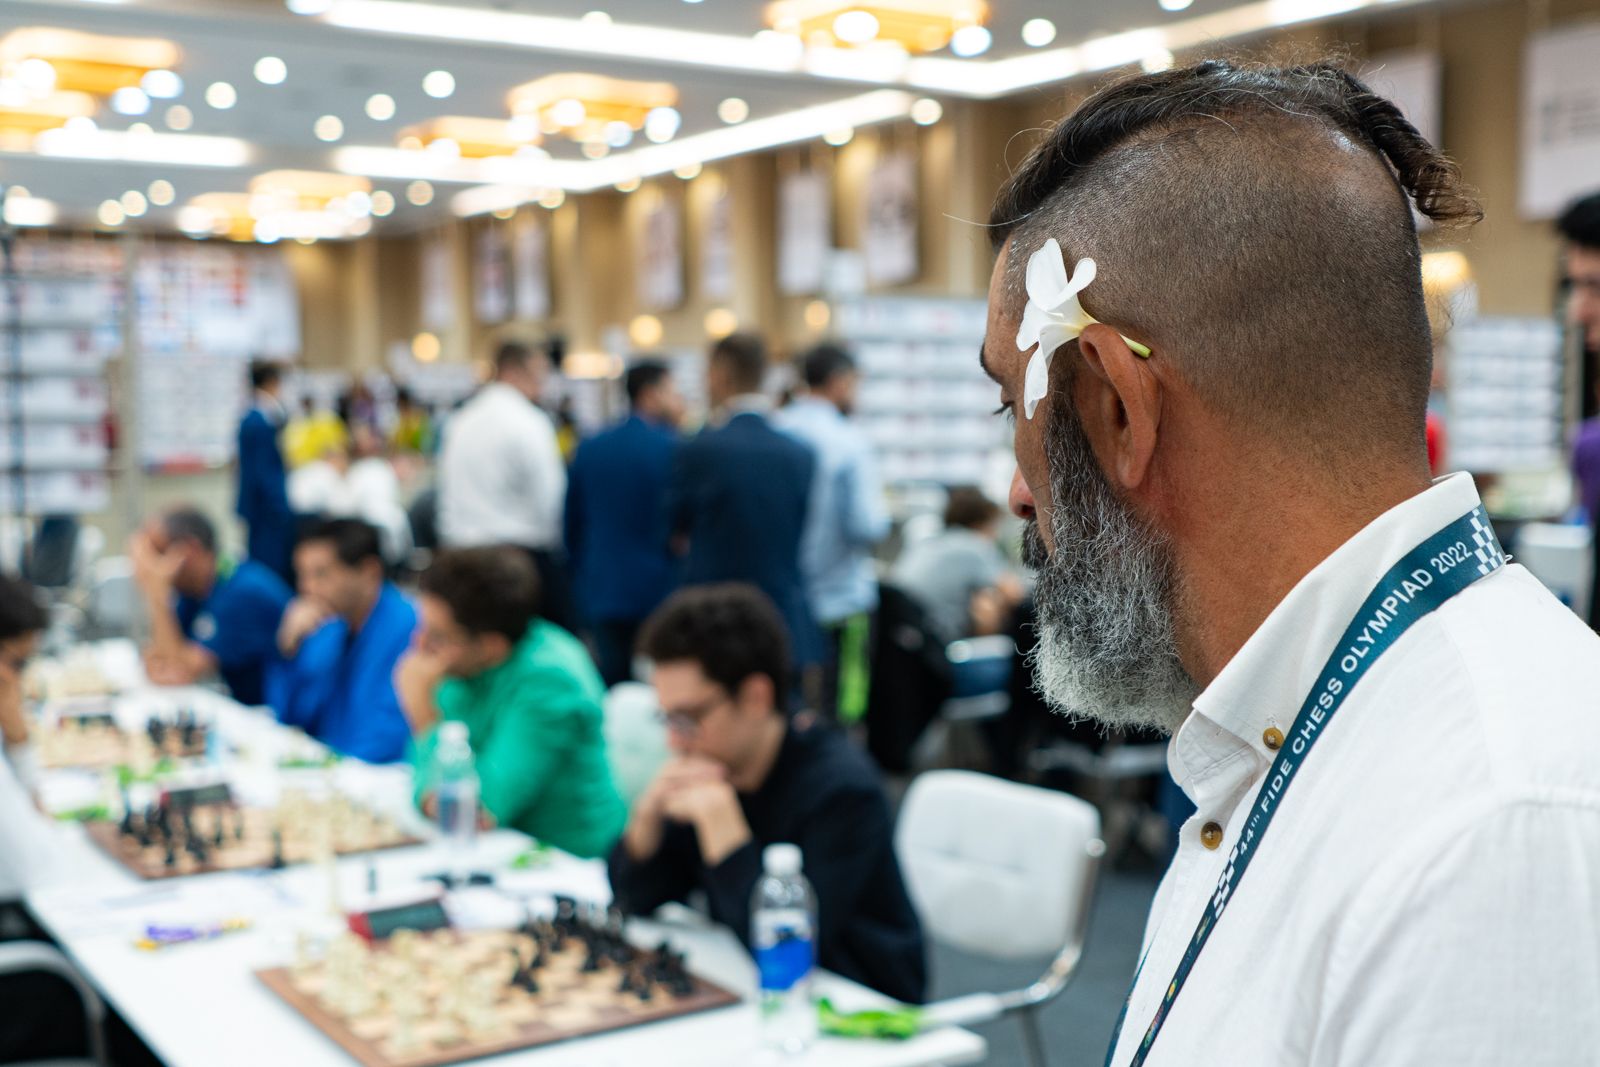 Meca do Xadrez', Chennai sediará a Olimpíada de Xadrez da FIDE